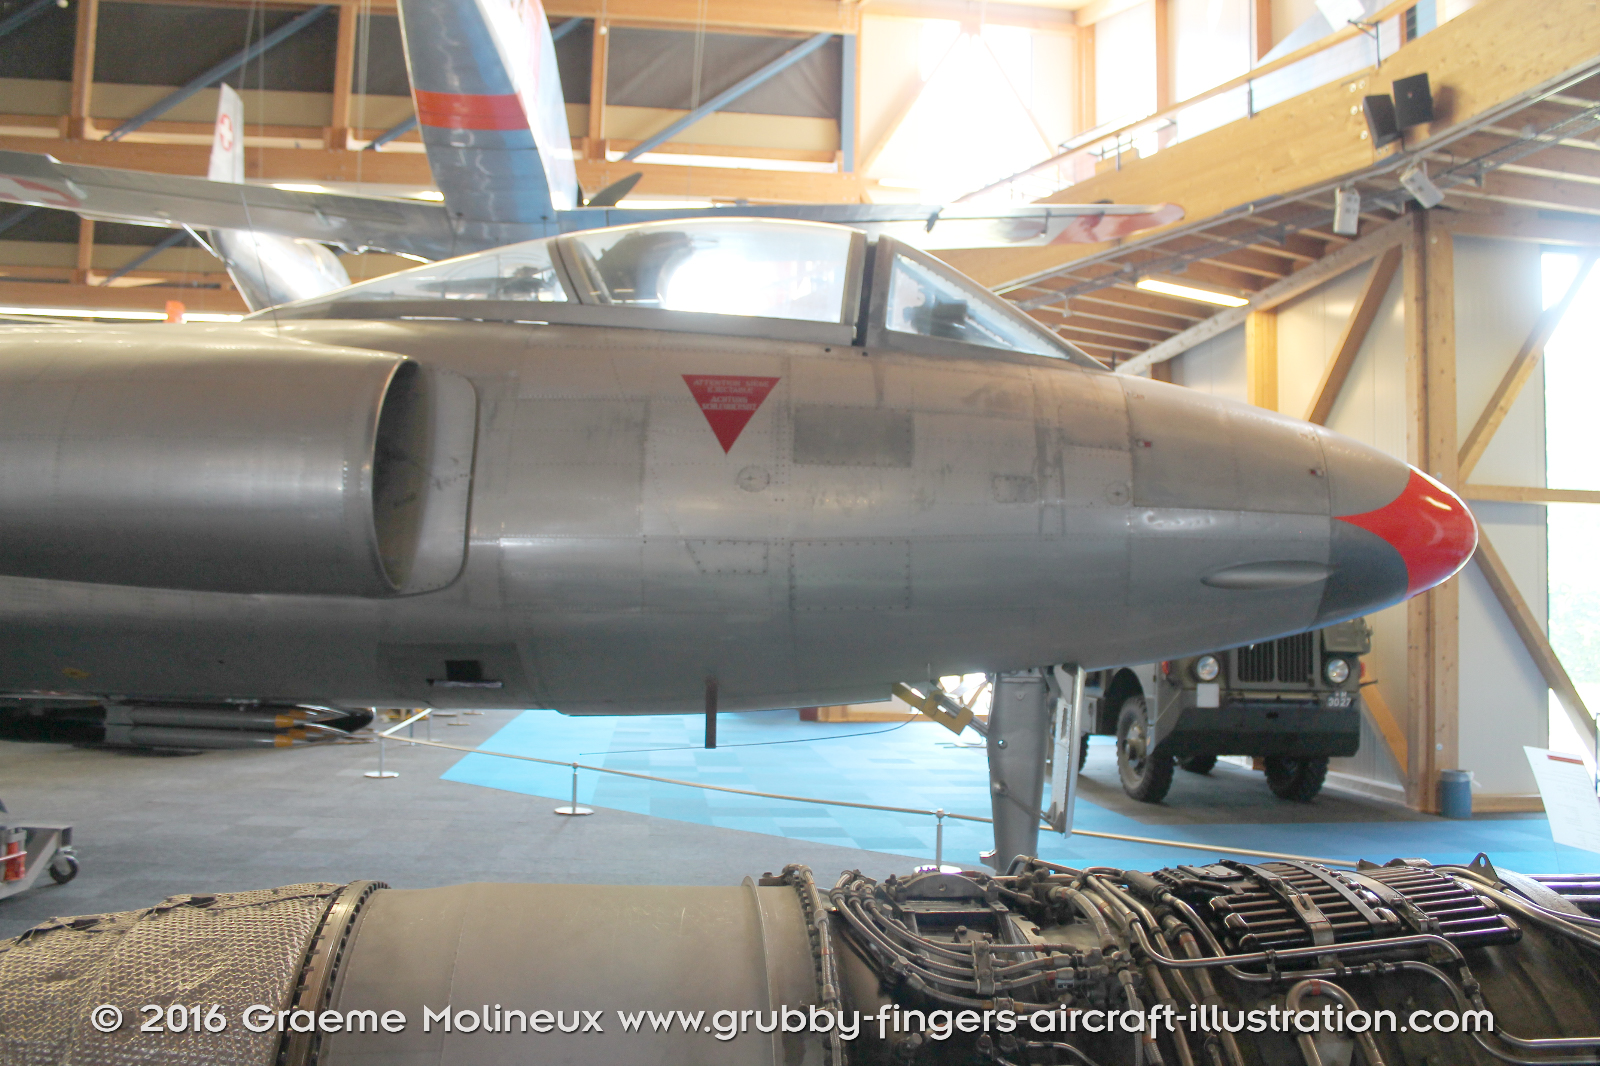 FFA_P-16_X-HB-VAD_Swiss_Air_Force_Museum_2015_15_GrubbyFingers